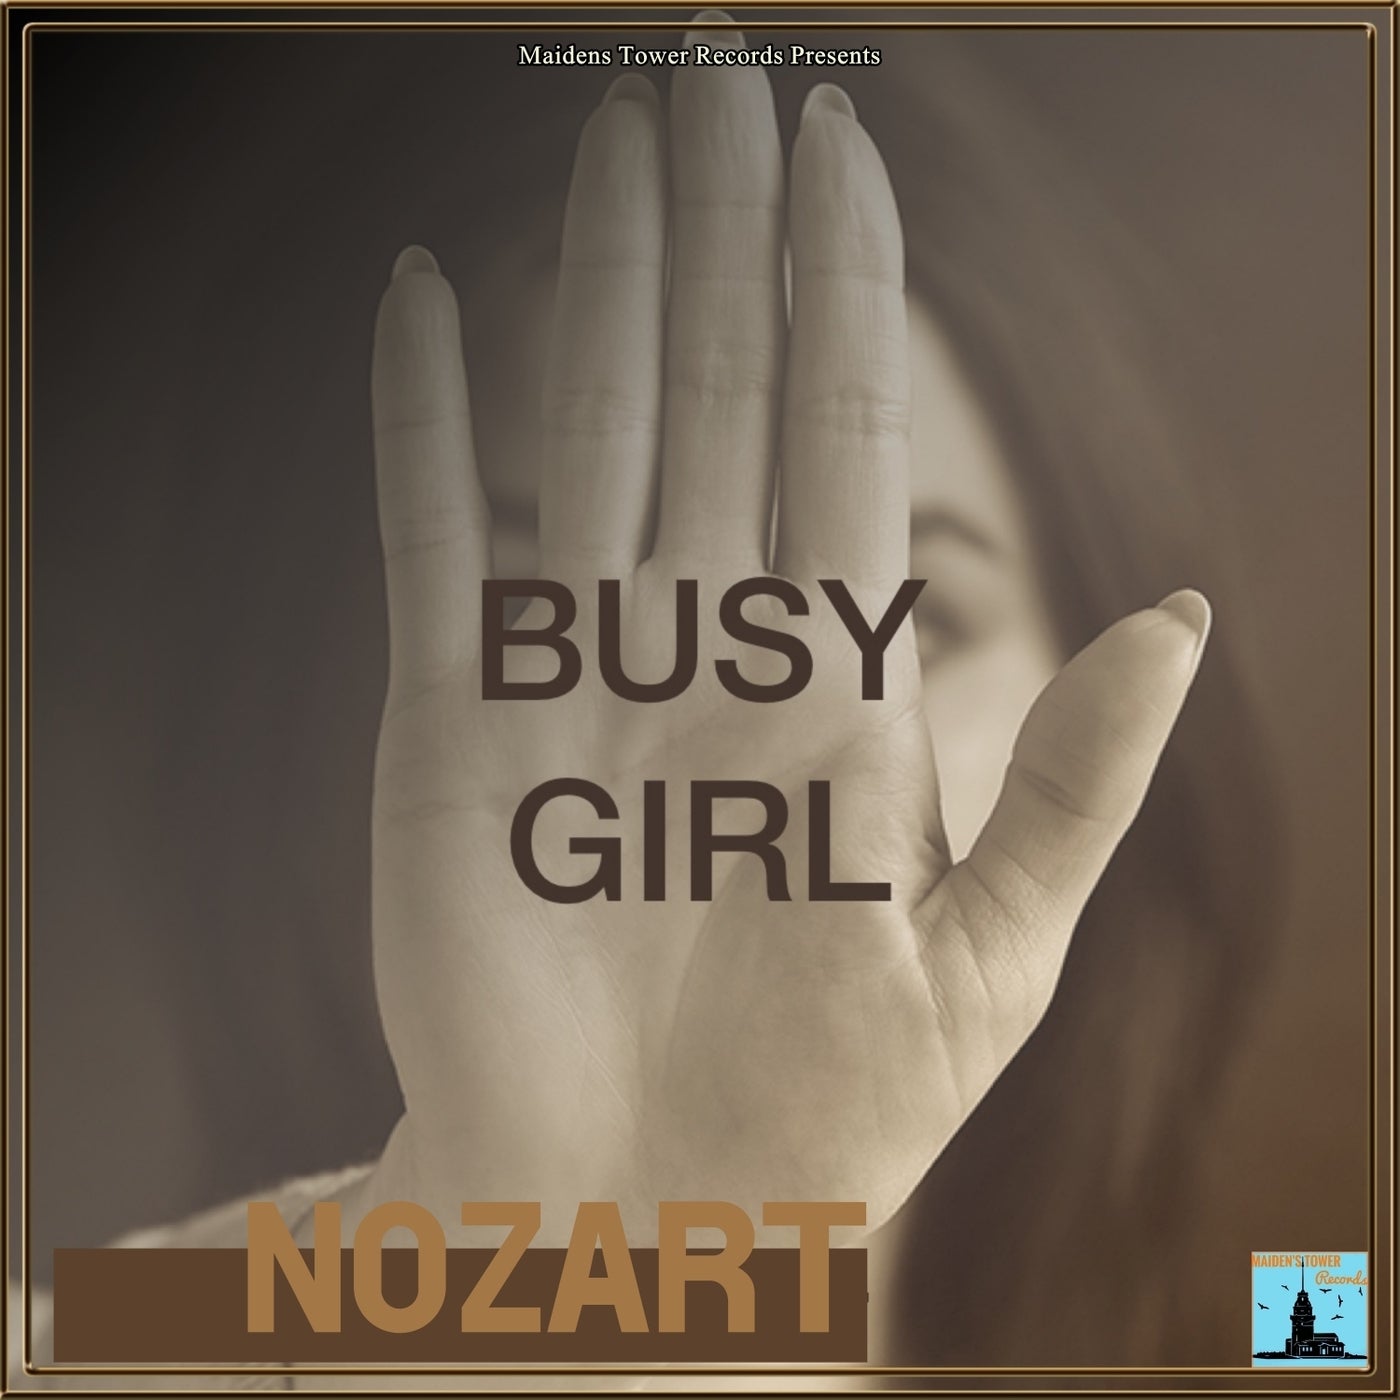 Busy Girl